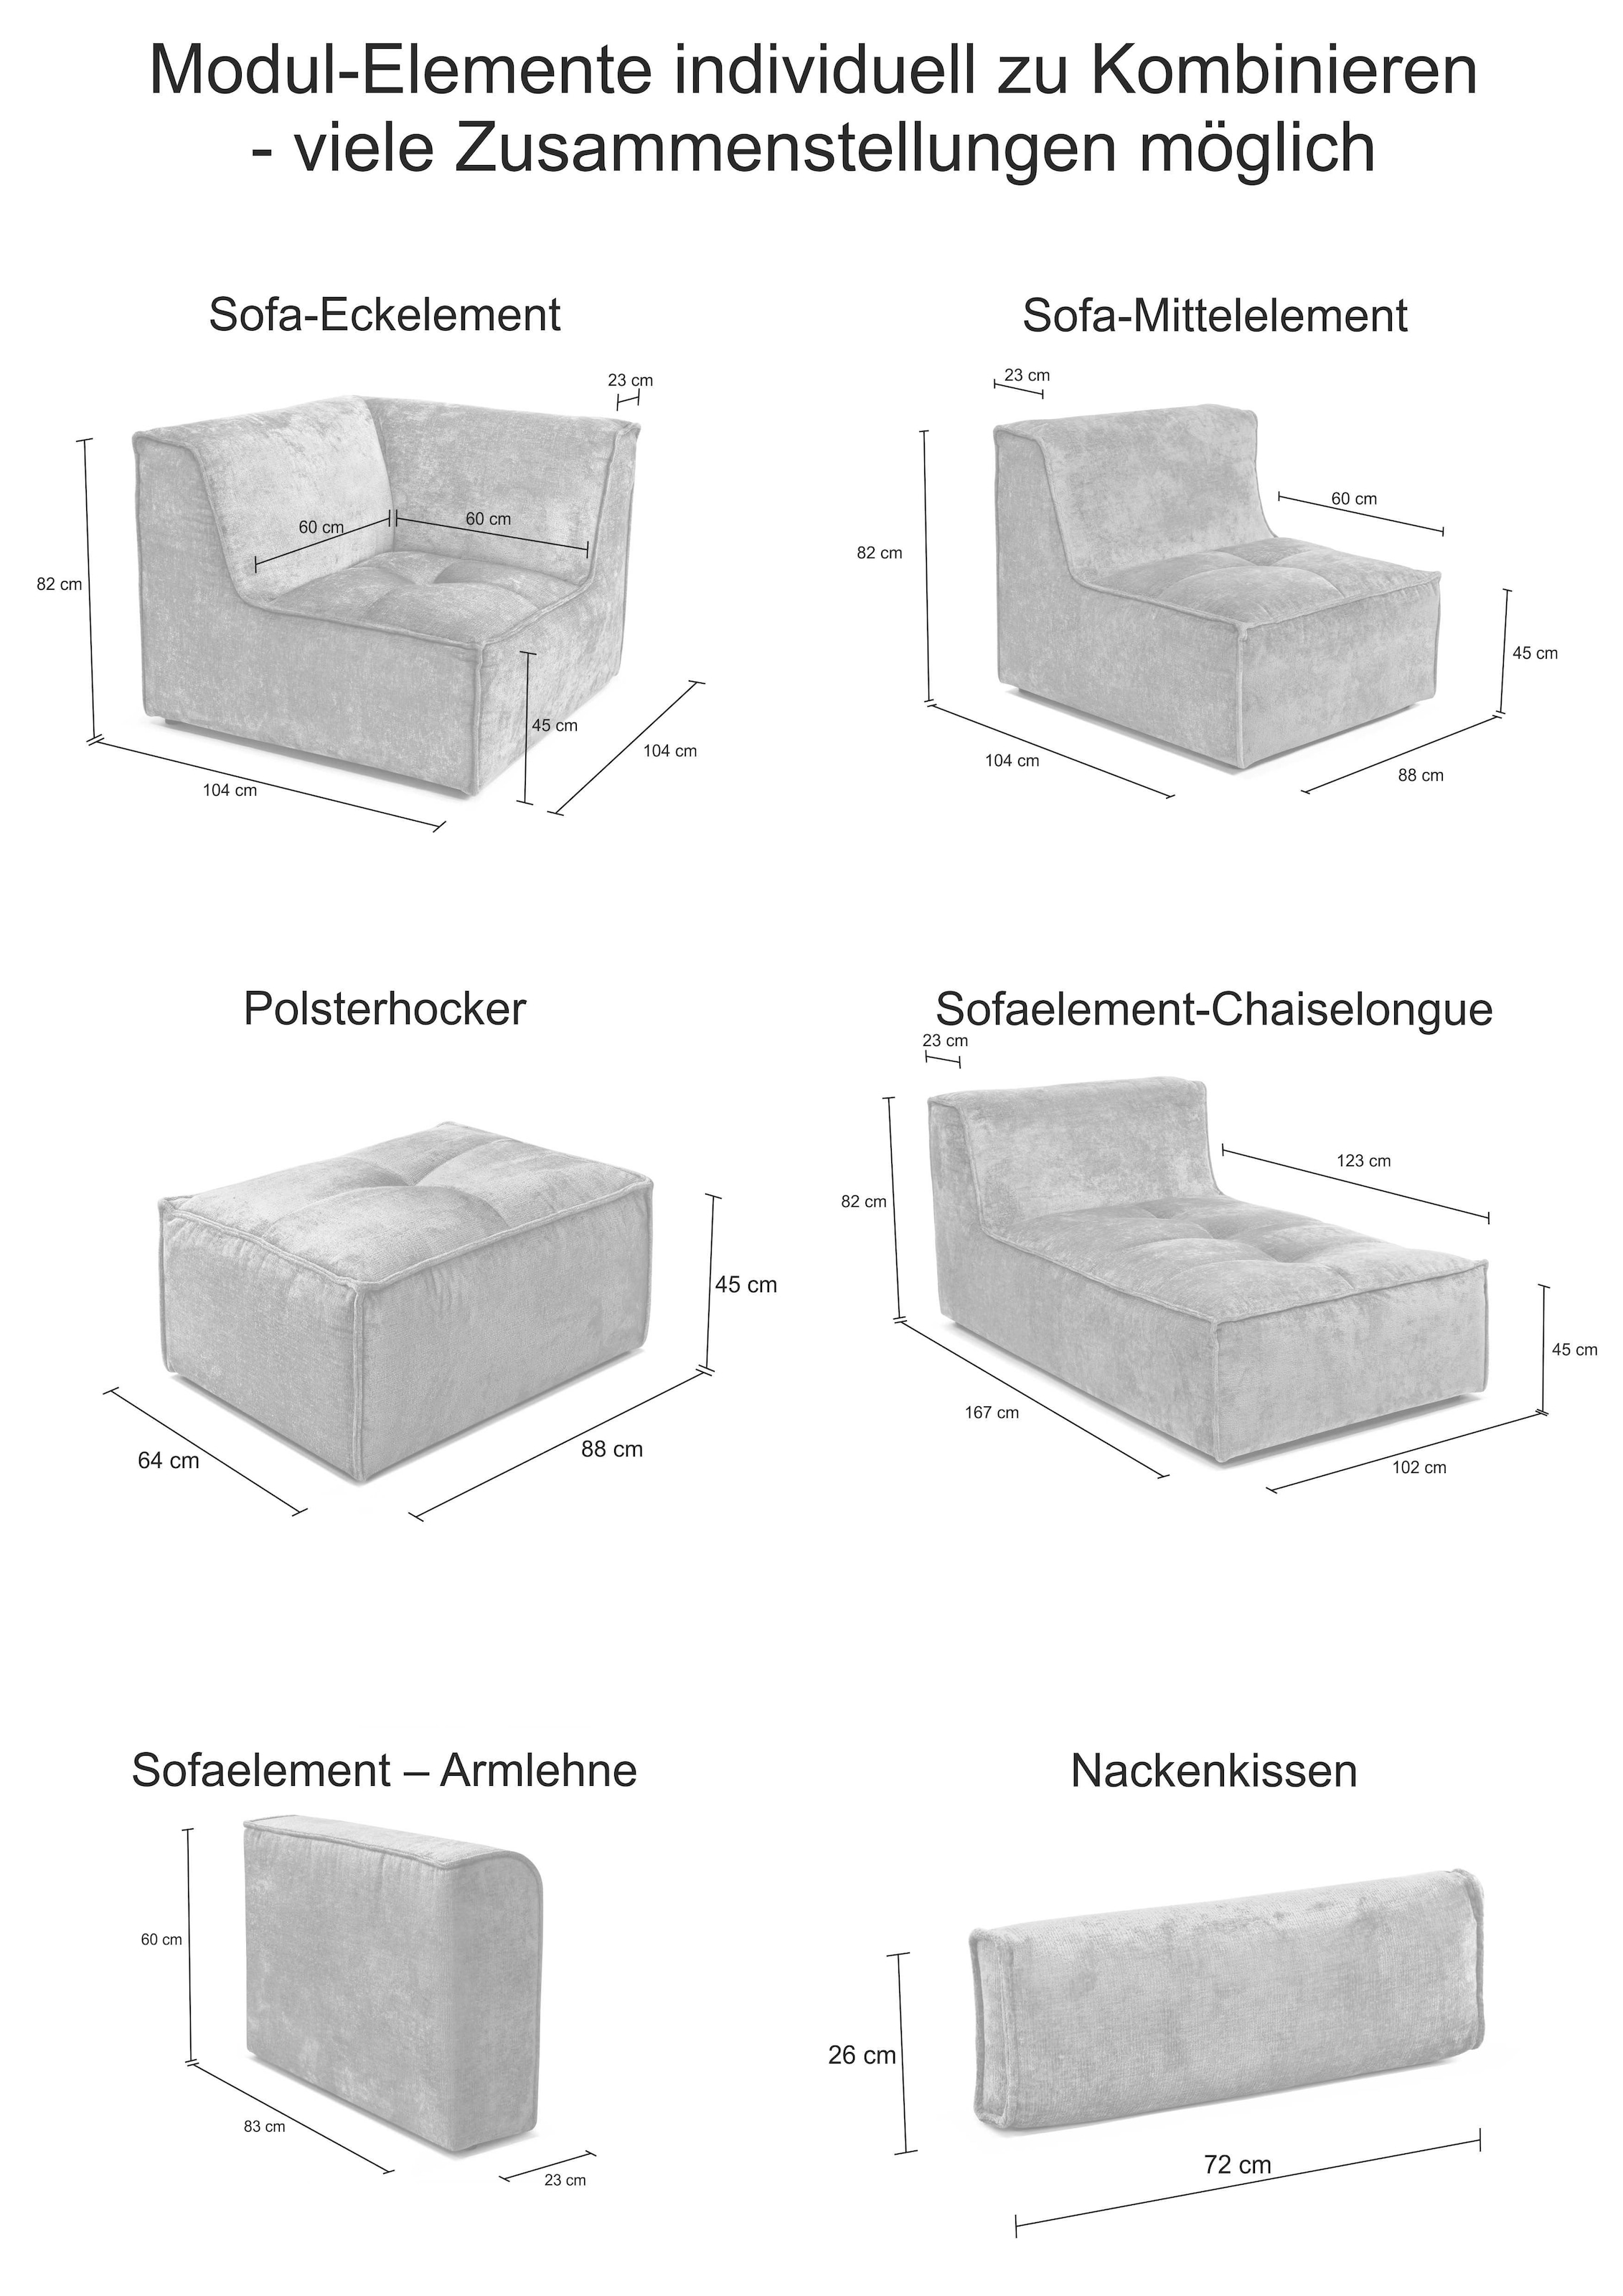 Sofa-Mittelelement | RAUM.ID BAUR